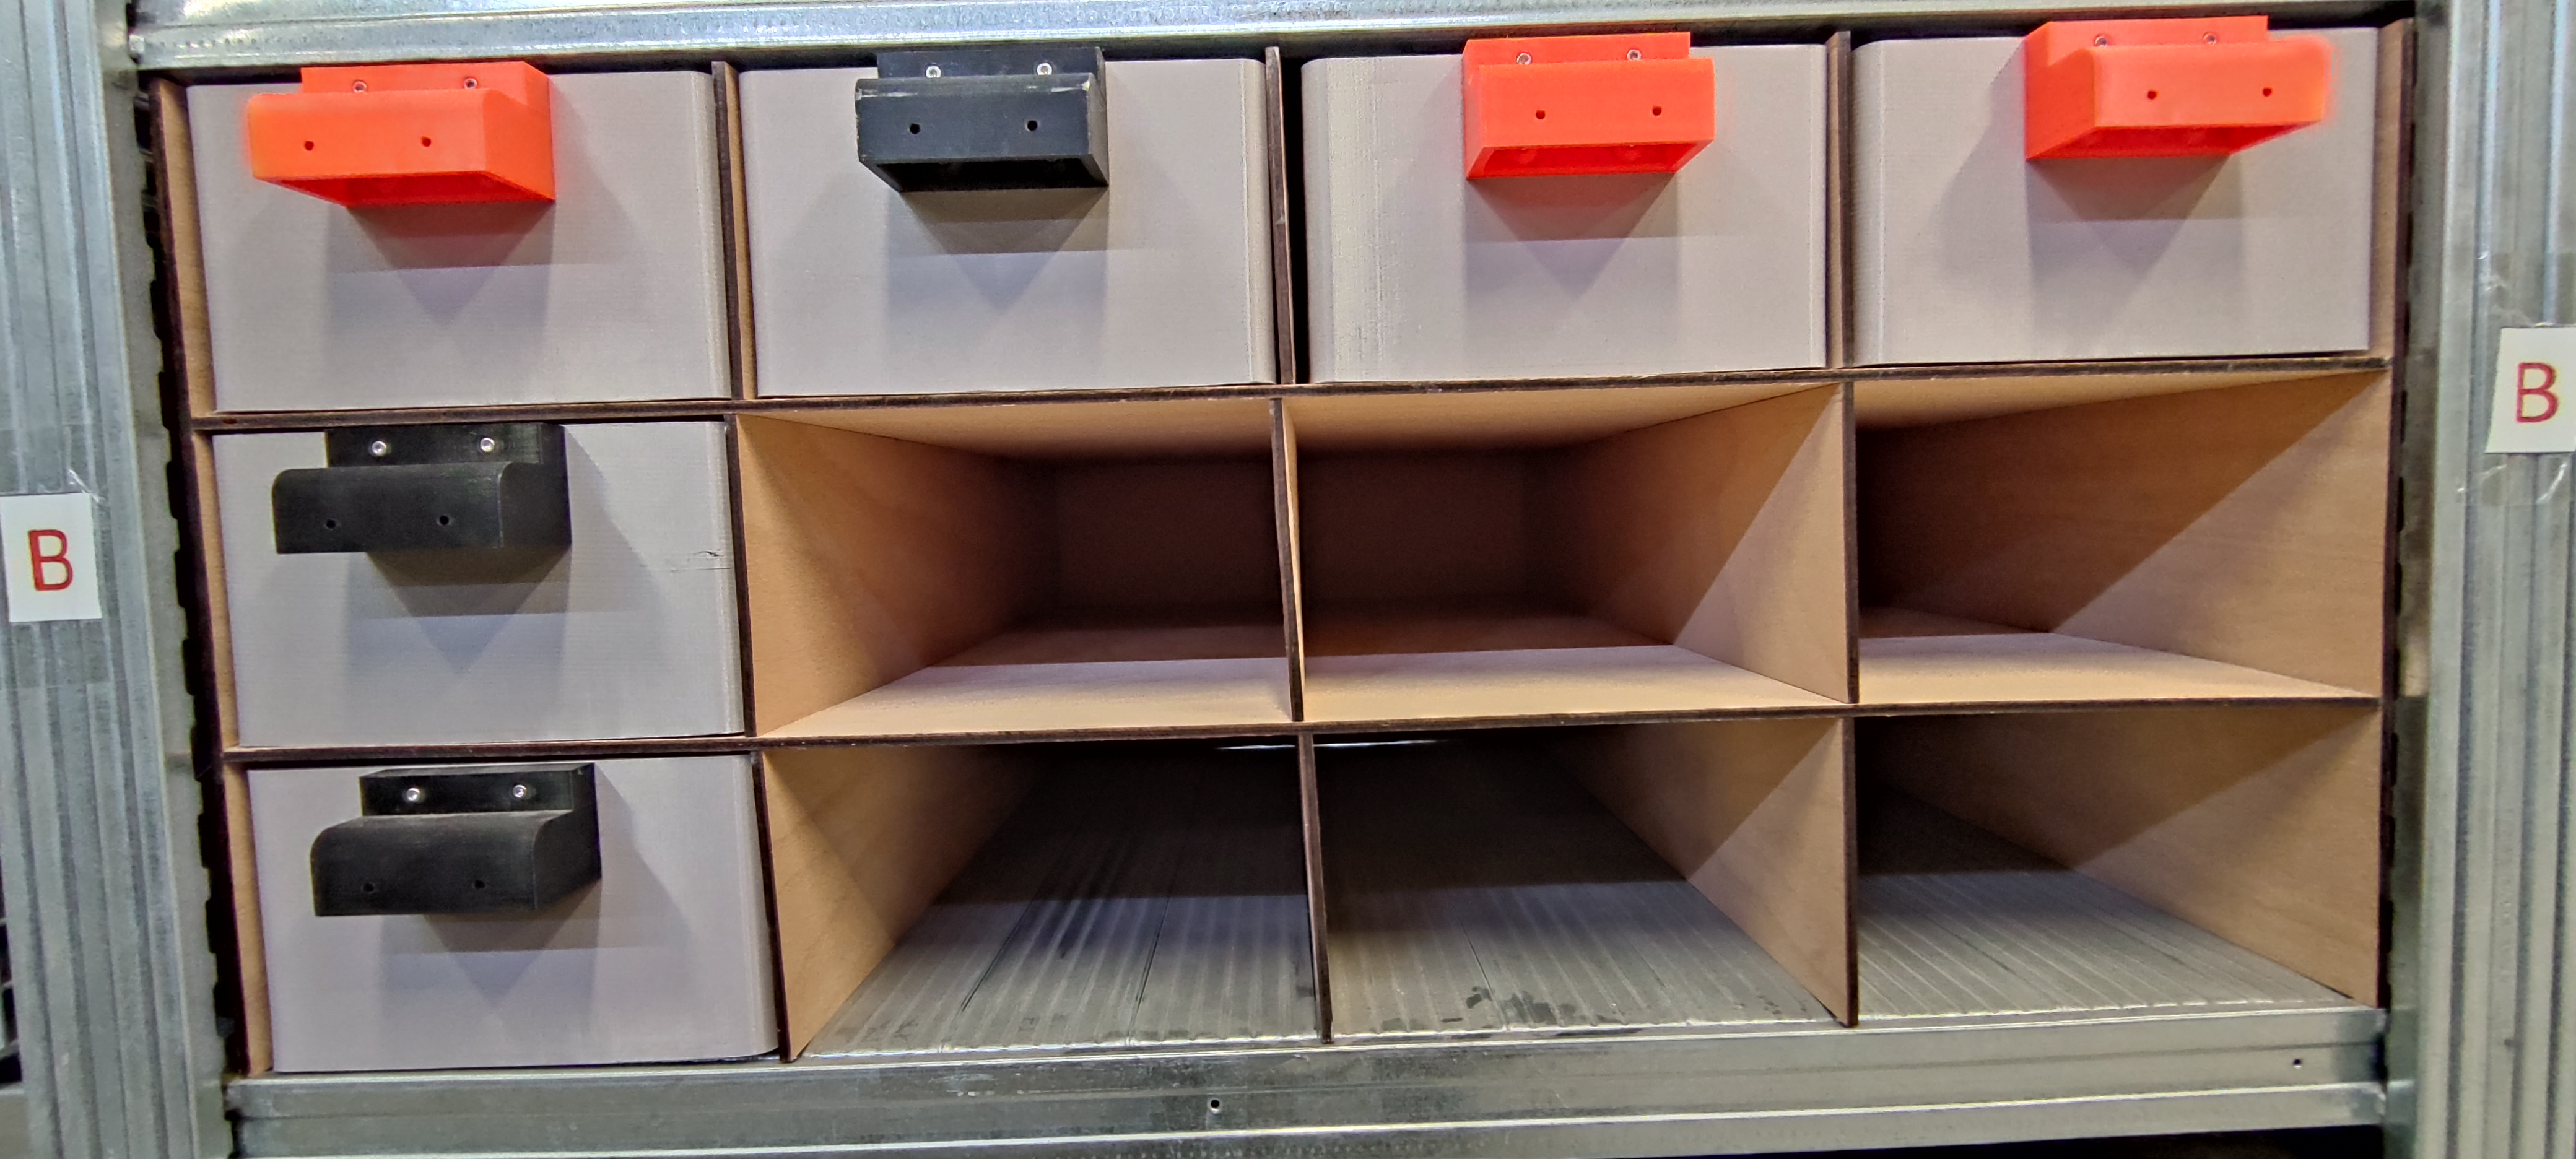 DIY modular storage system with drawers